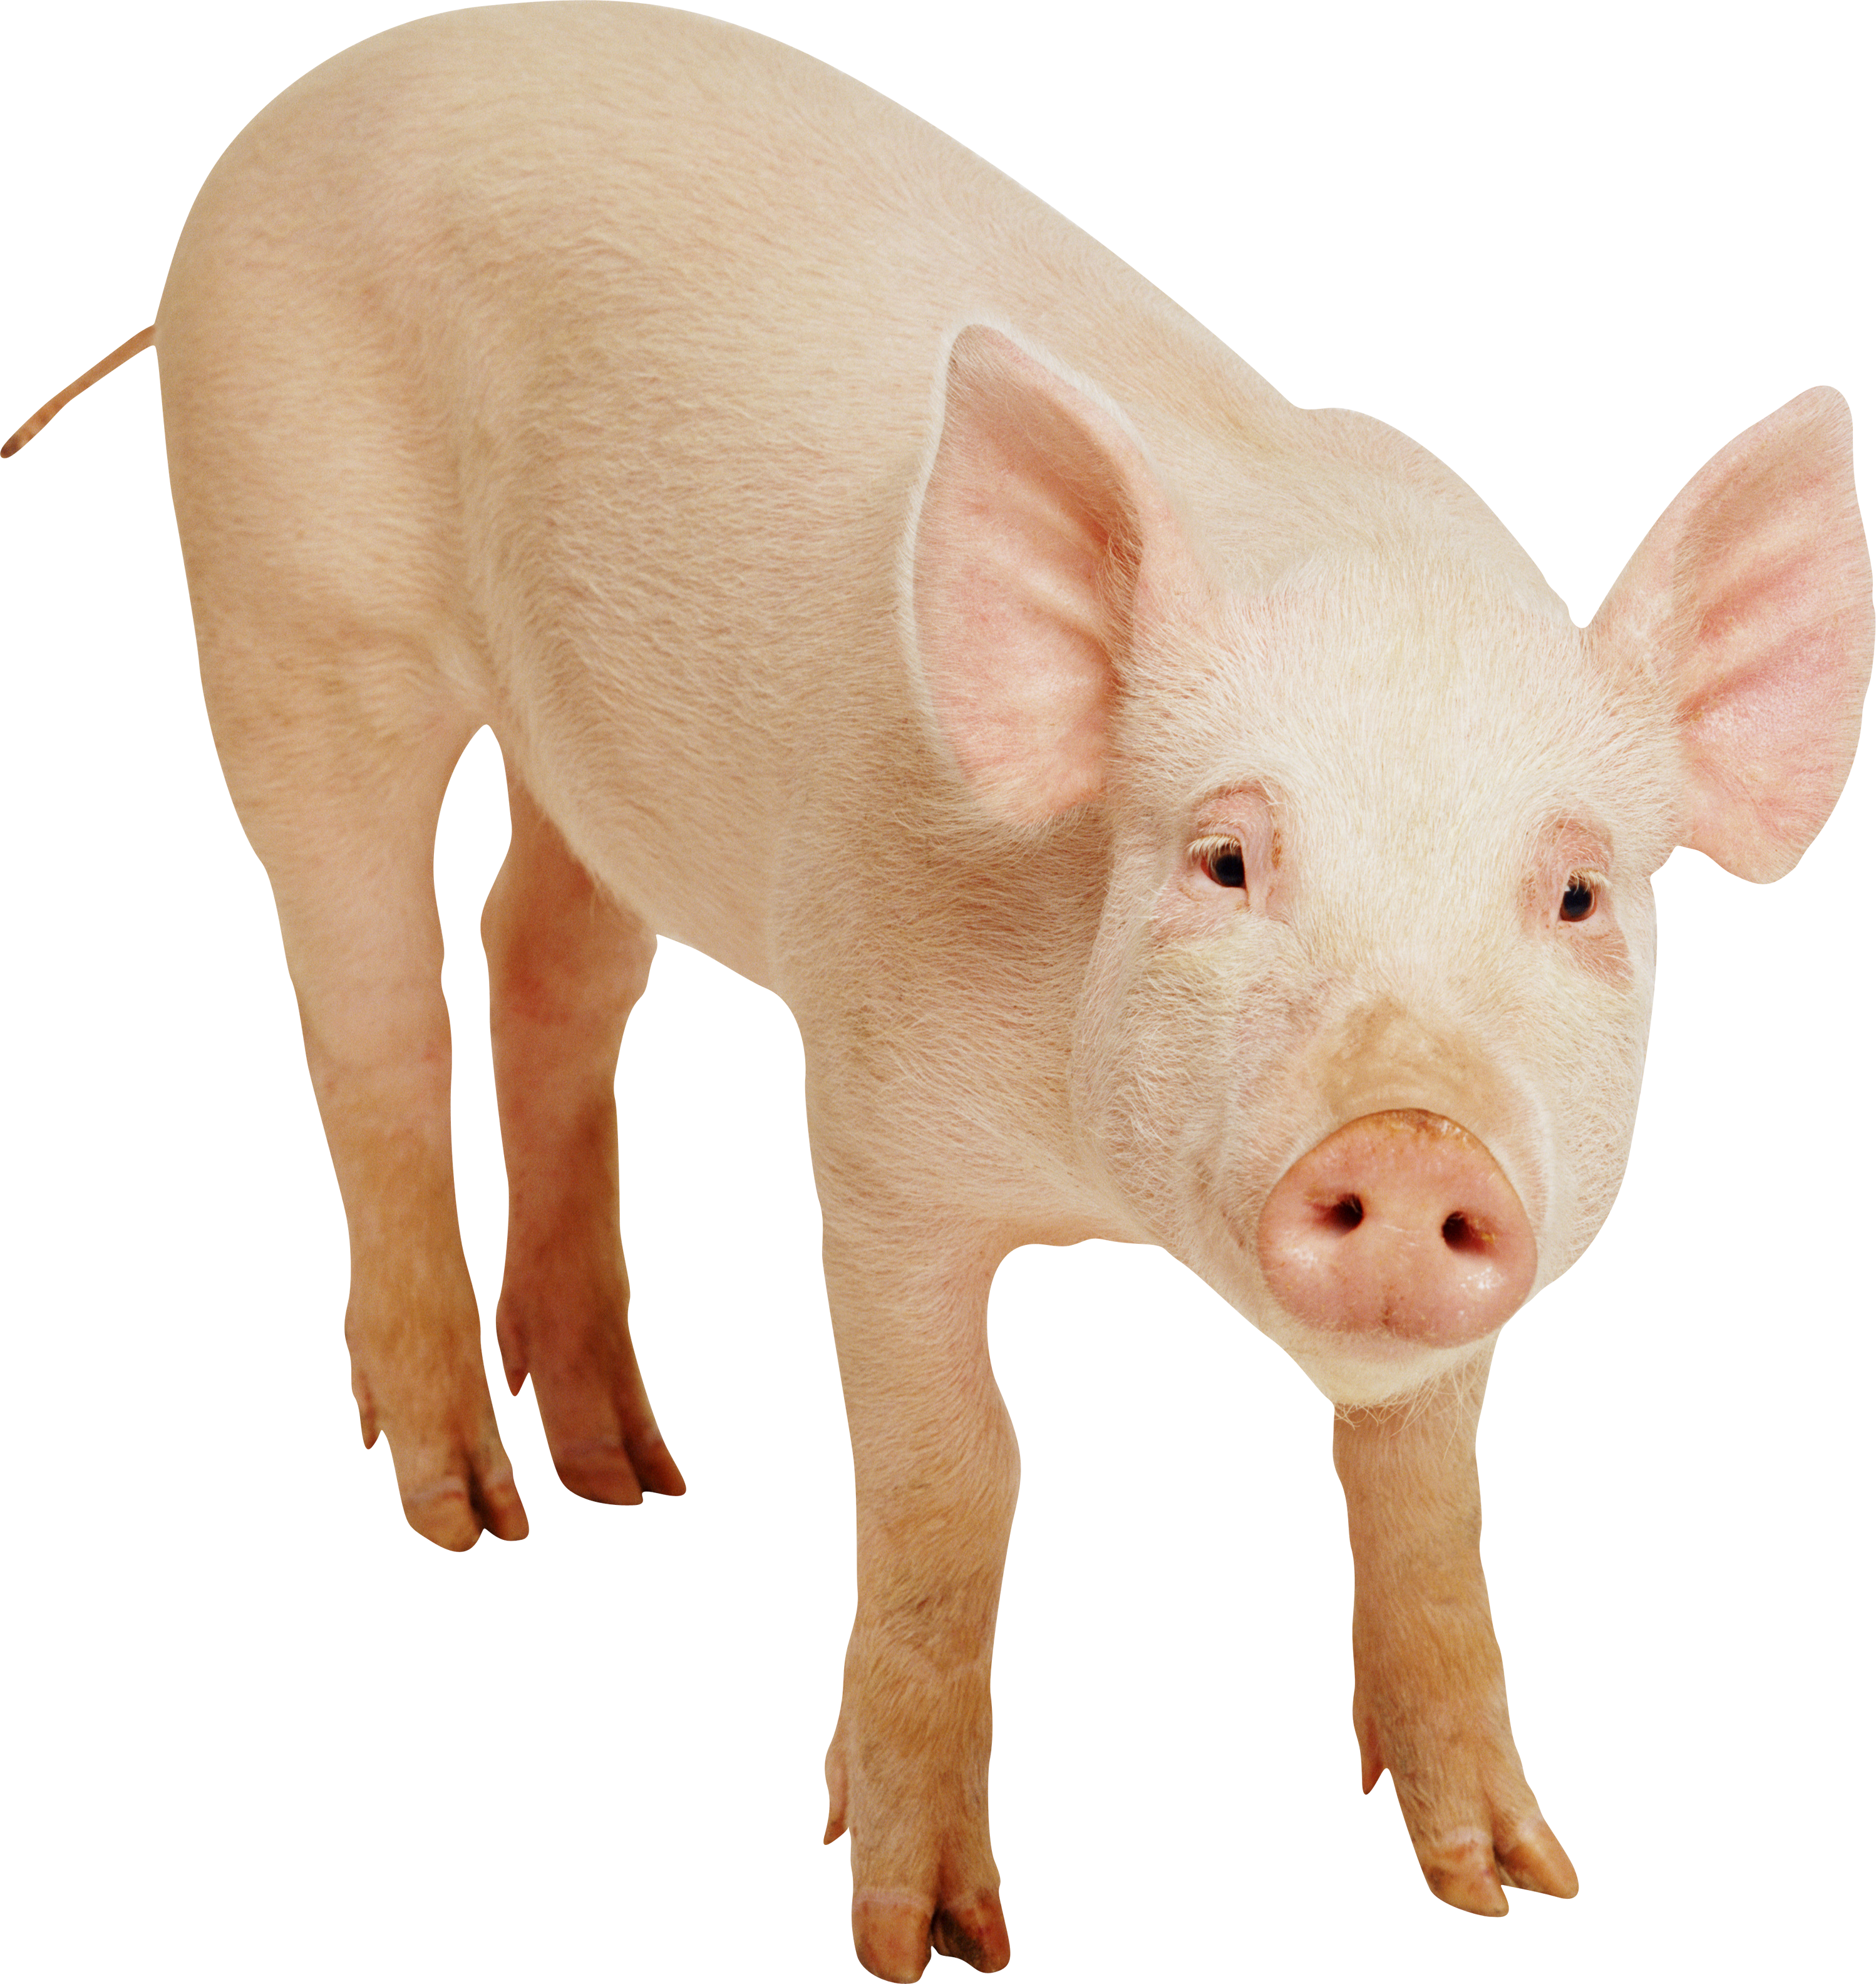 Pig Png - Pig, Transparent background PNG HD thumbnail